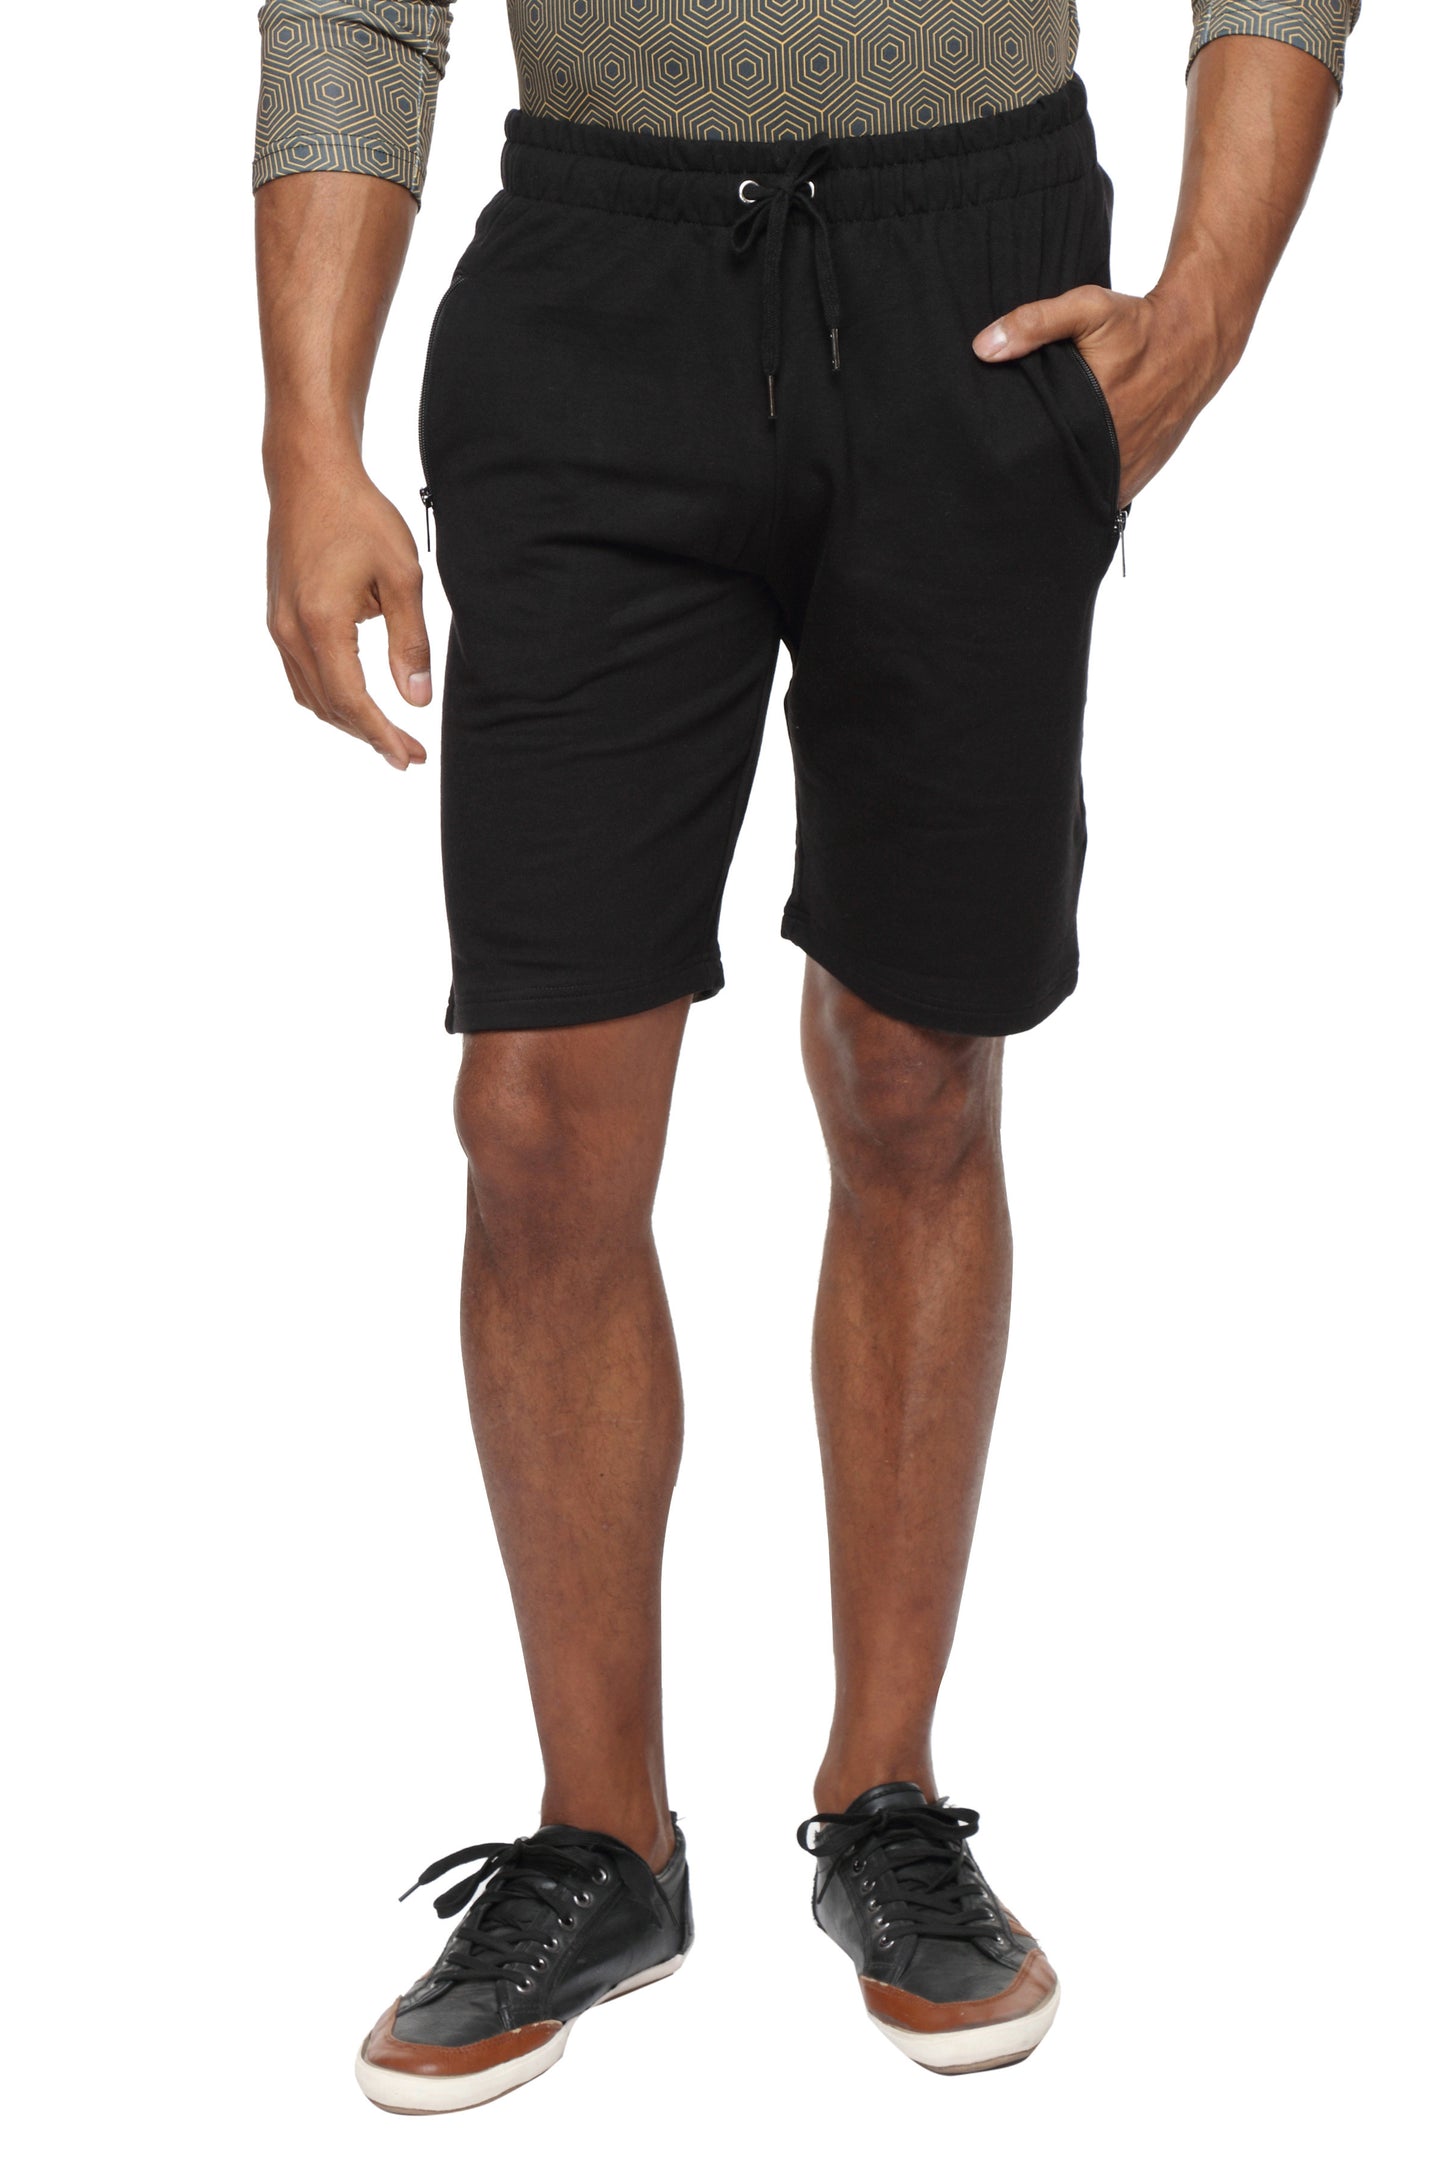 Cotton casual training Shorts- Black - Zebo Active Wear